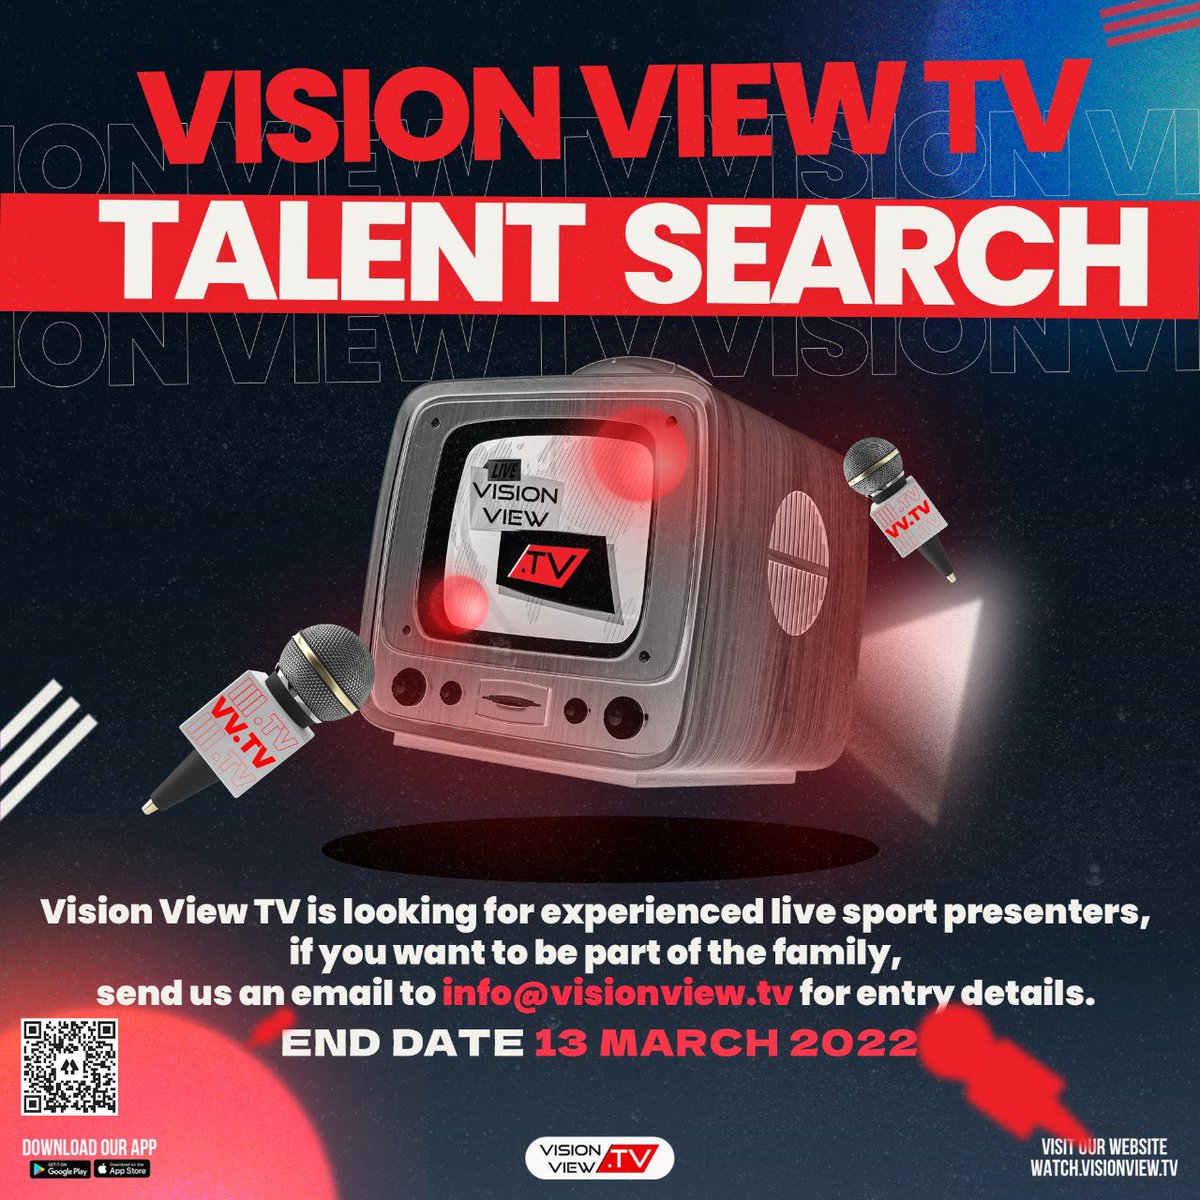 Opportunity for sports presenters! 

#hiring #jobs #sportspresenter #jobsinsports